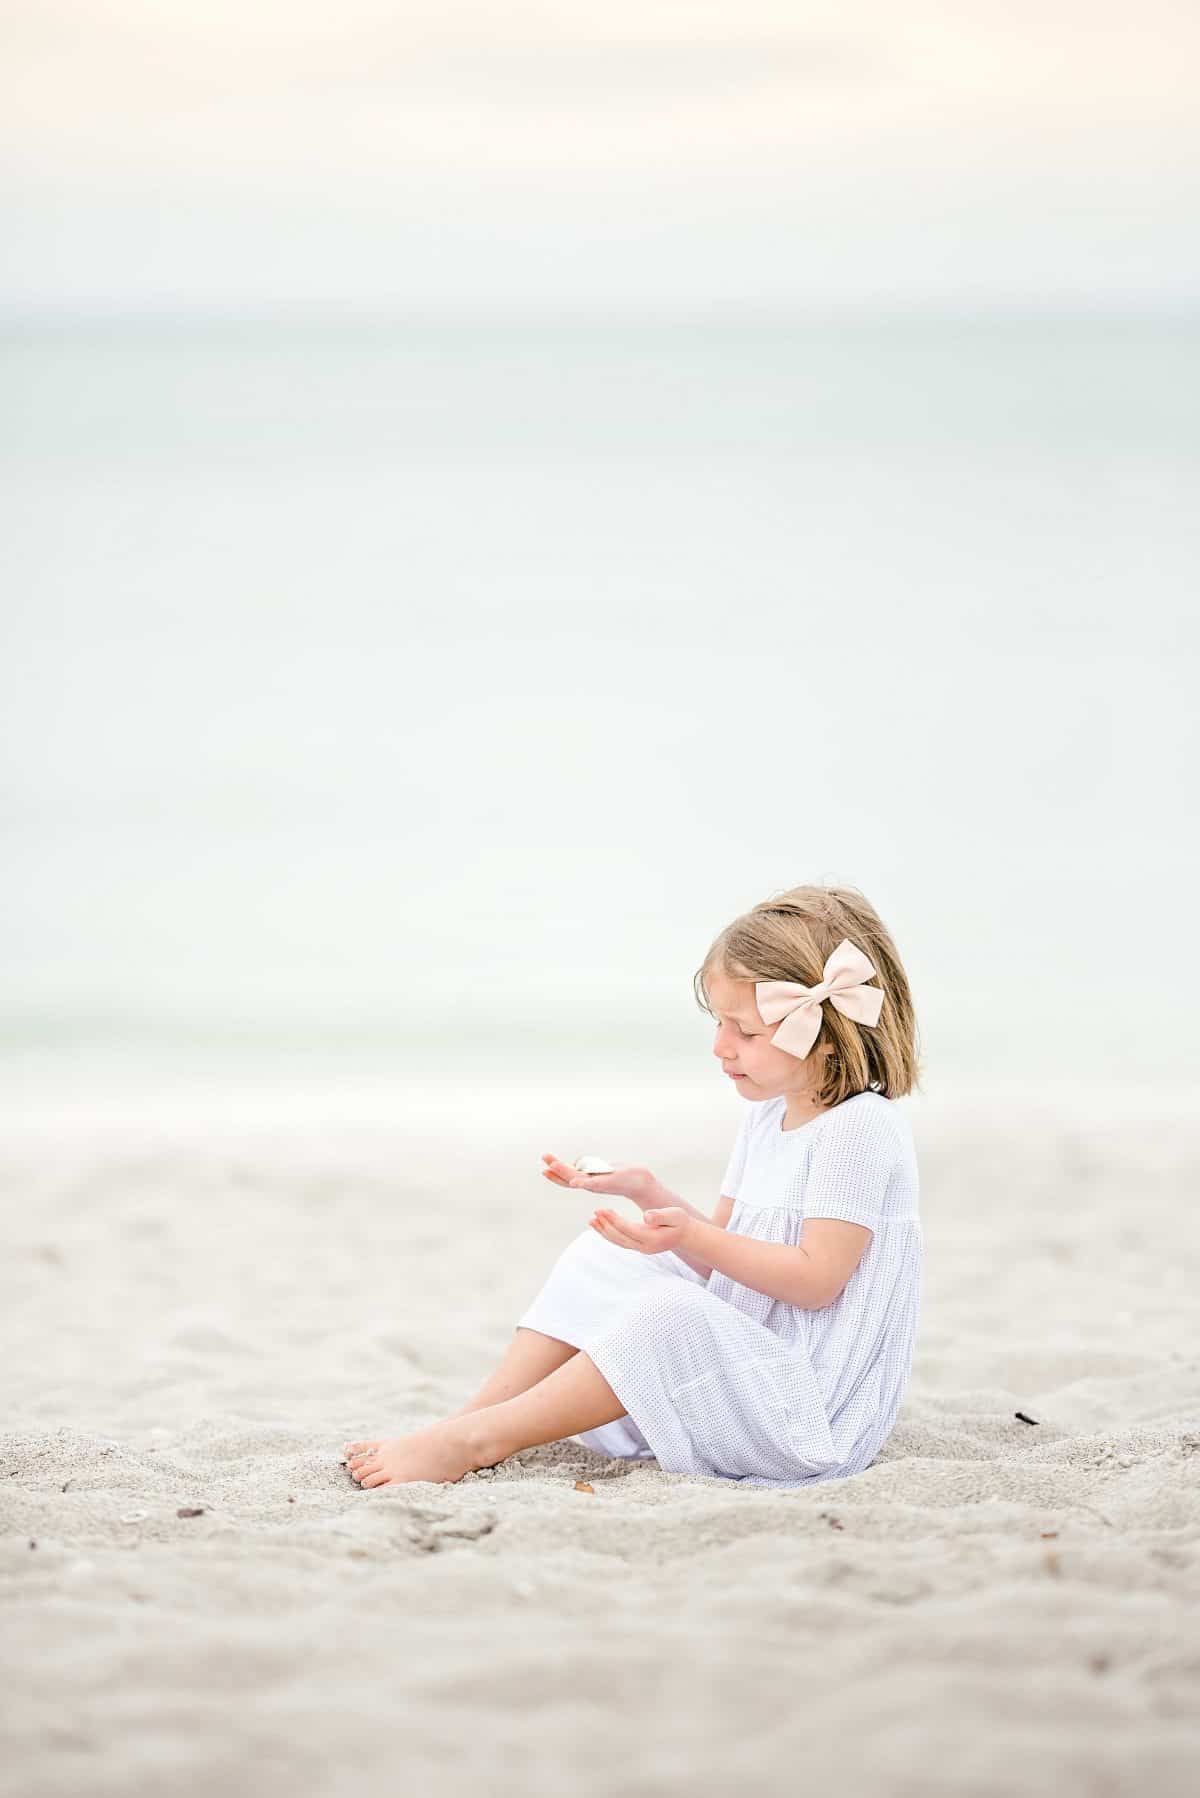 Beach Photoshoot Poses | Beach Poses for Girls | Photoshoot Ideas | Beach  Girl Dress | Goa Lookbook - YouTube